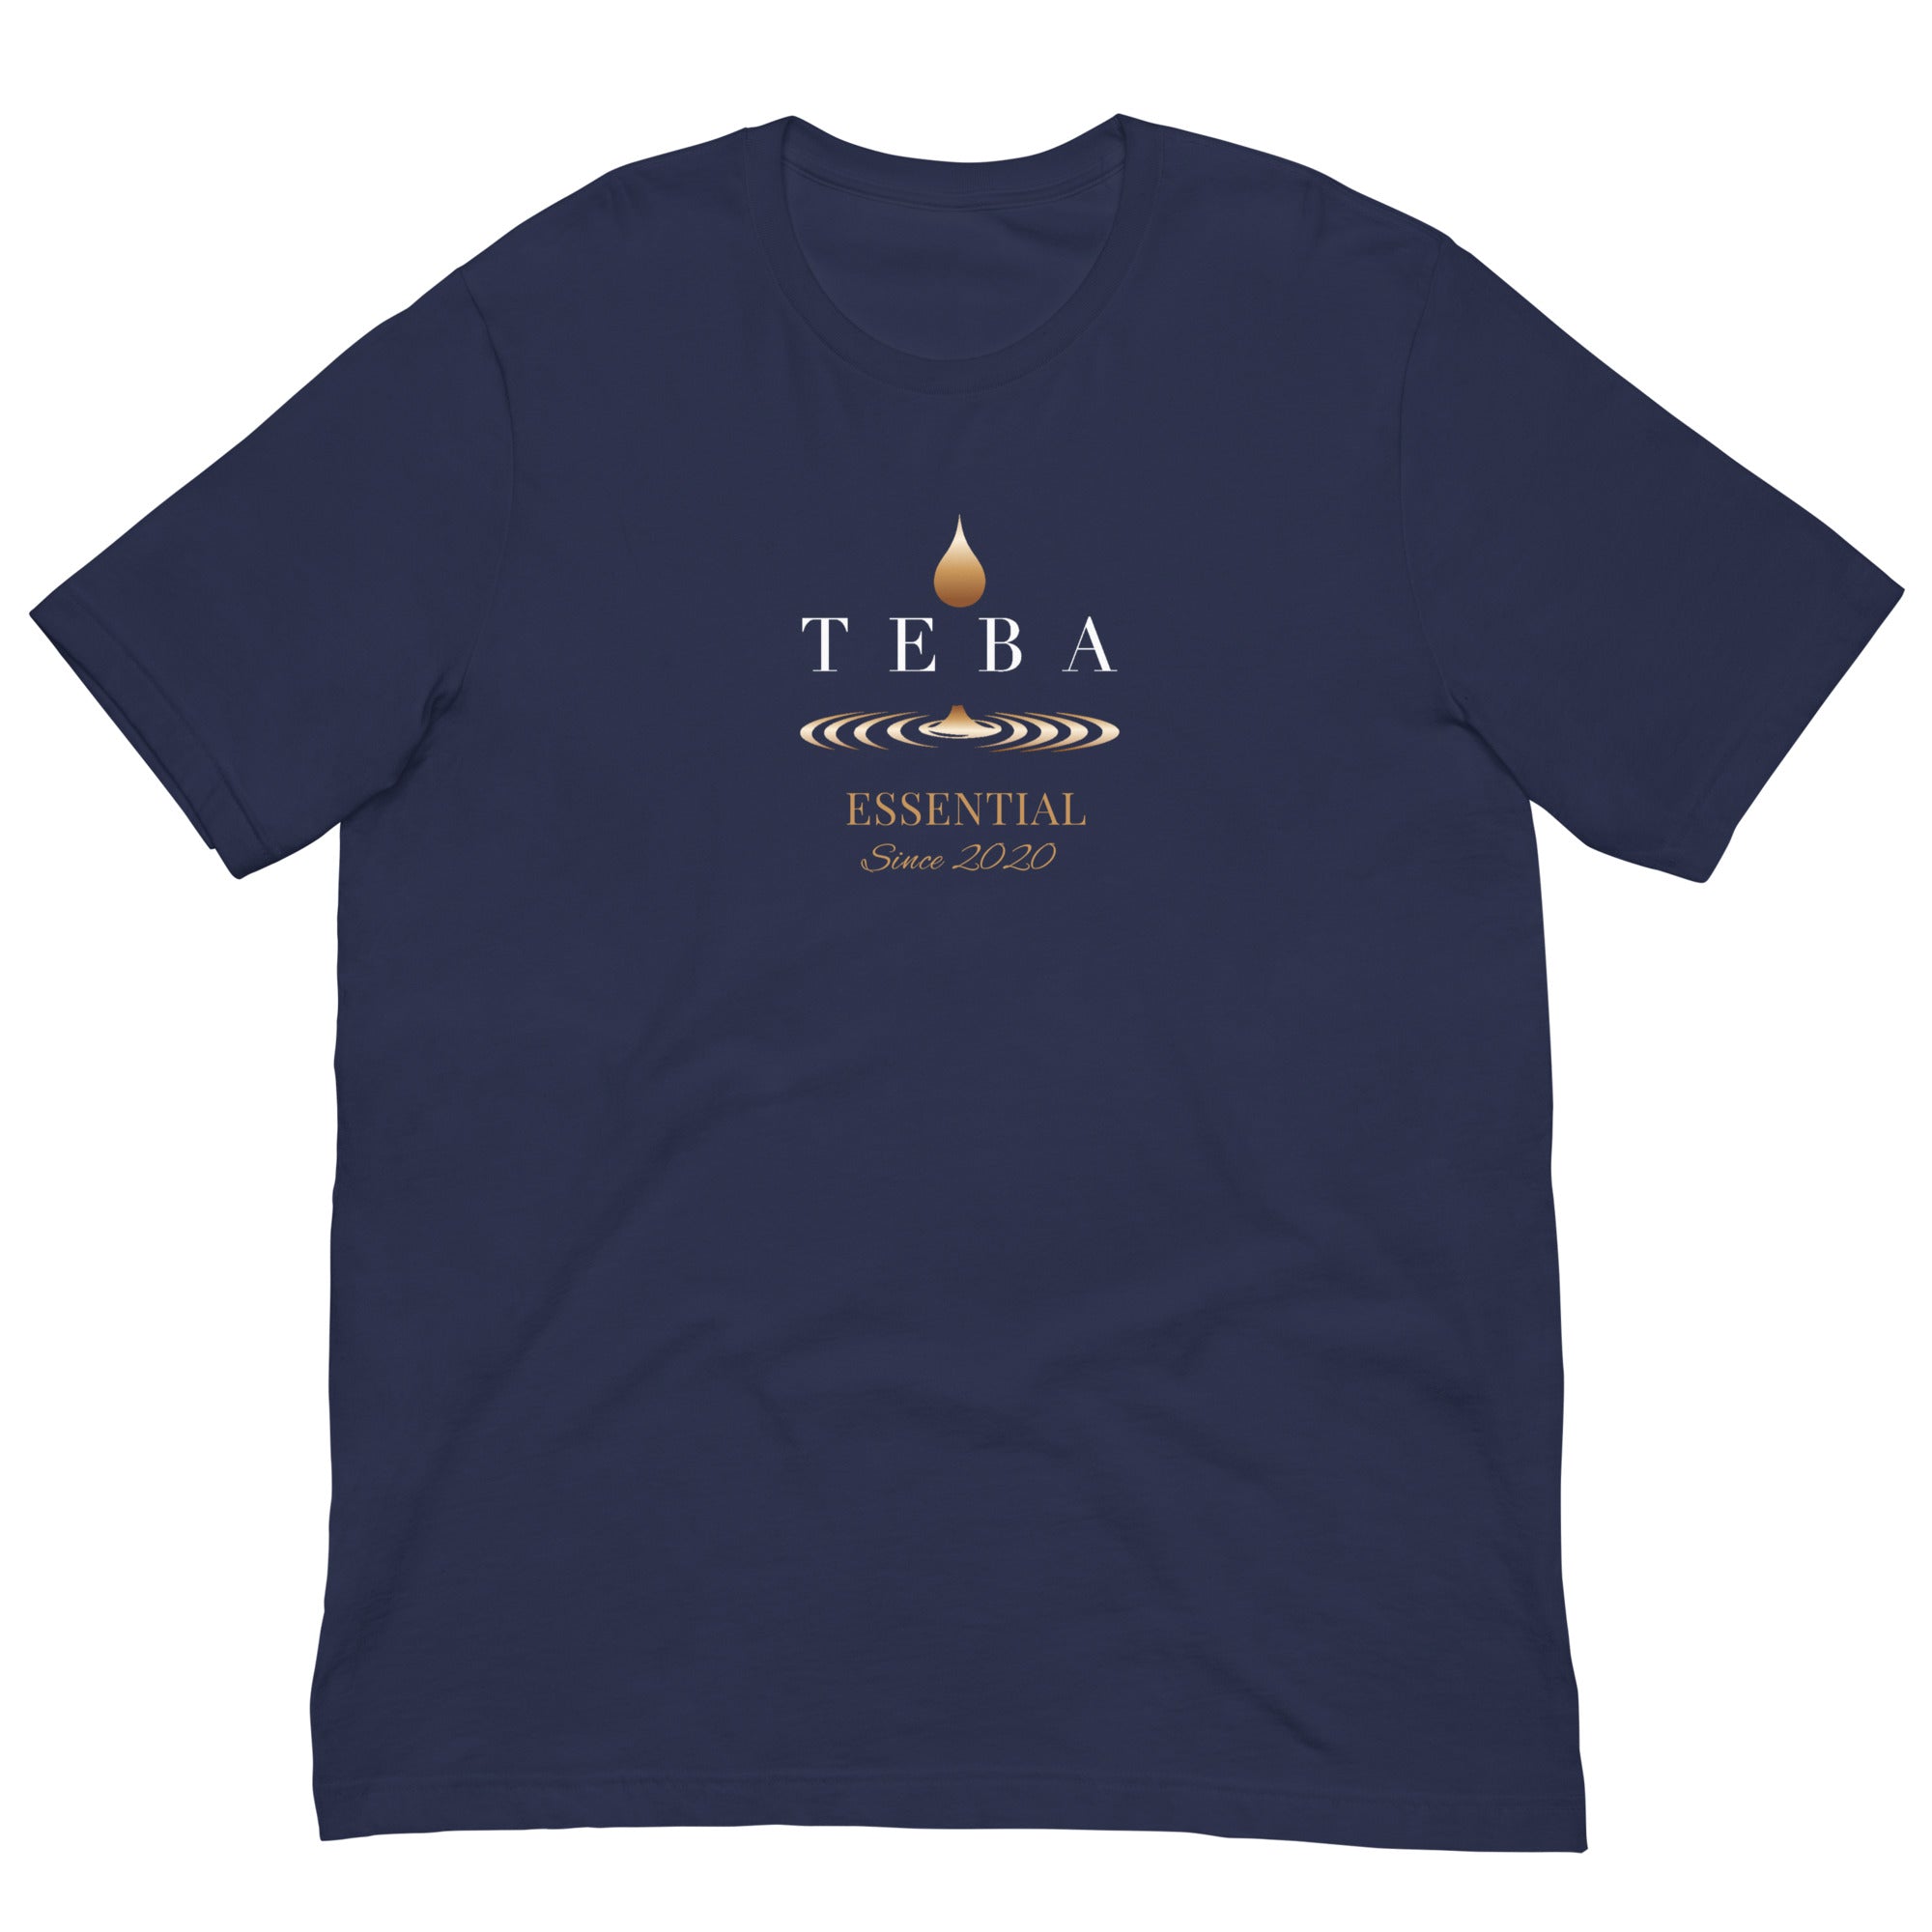 TEBA Essential Since 2020